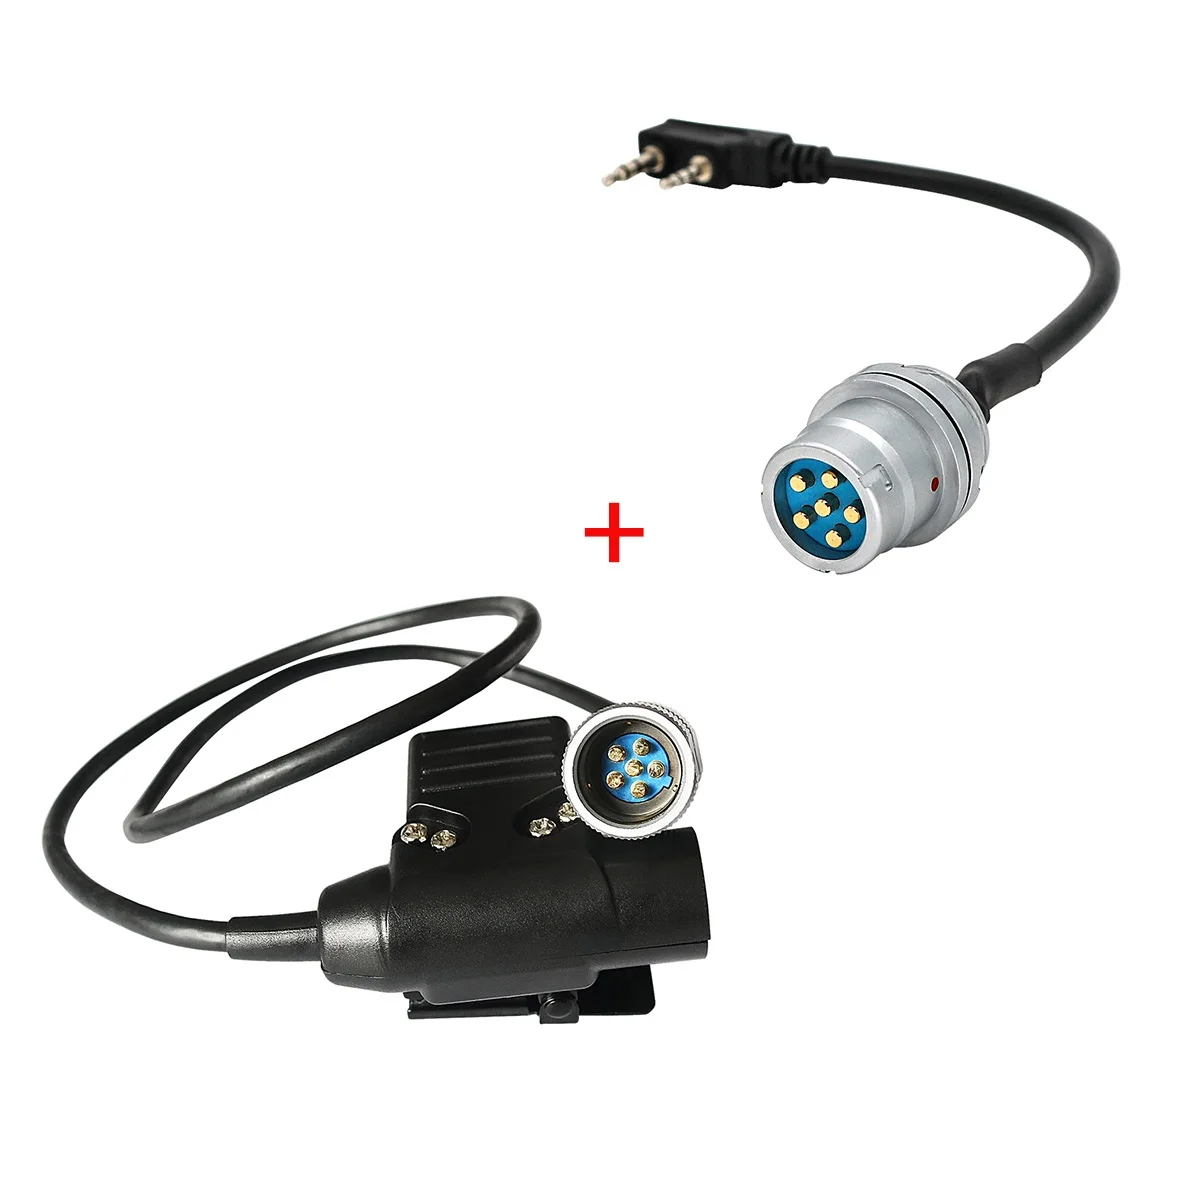 U94 6 pin PTT+U-283 / U 6 pin plug turn to Kenwood walkie-talkie connector for PRC152 PRC148 Dummy case Tactical headset adapter